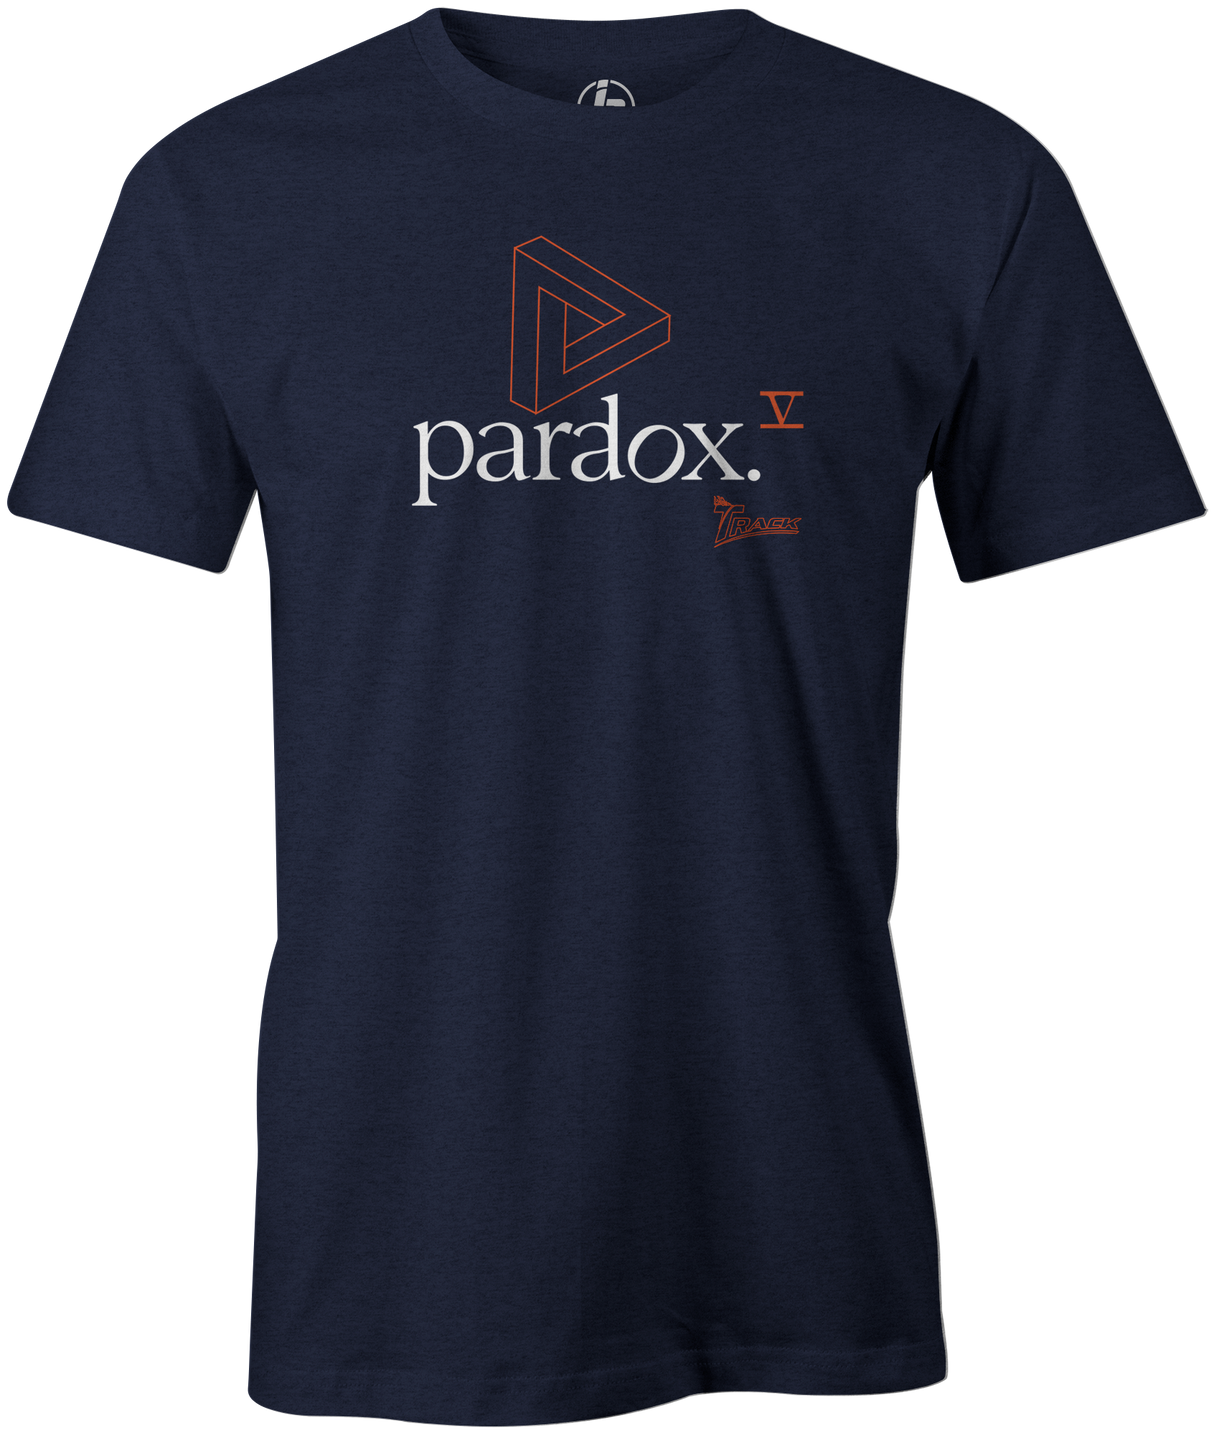 Paradox V Men's T-shirt, Navy, bowling, bowling ball, logo, track bowling, track, smart bowling, tshirt, tee, tee-shirt, tee shirt